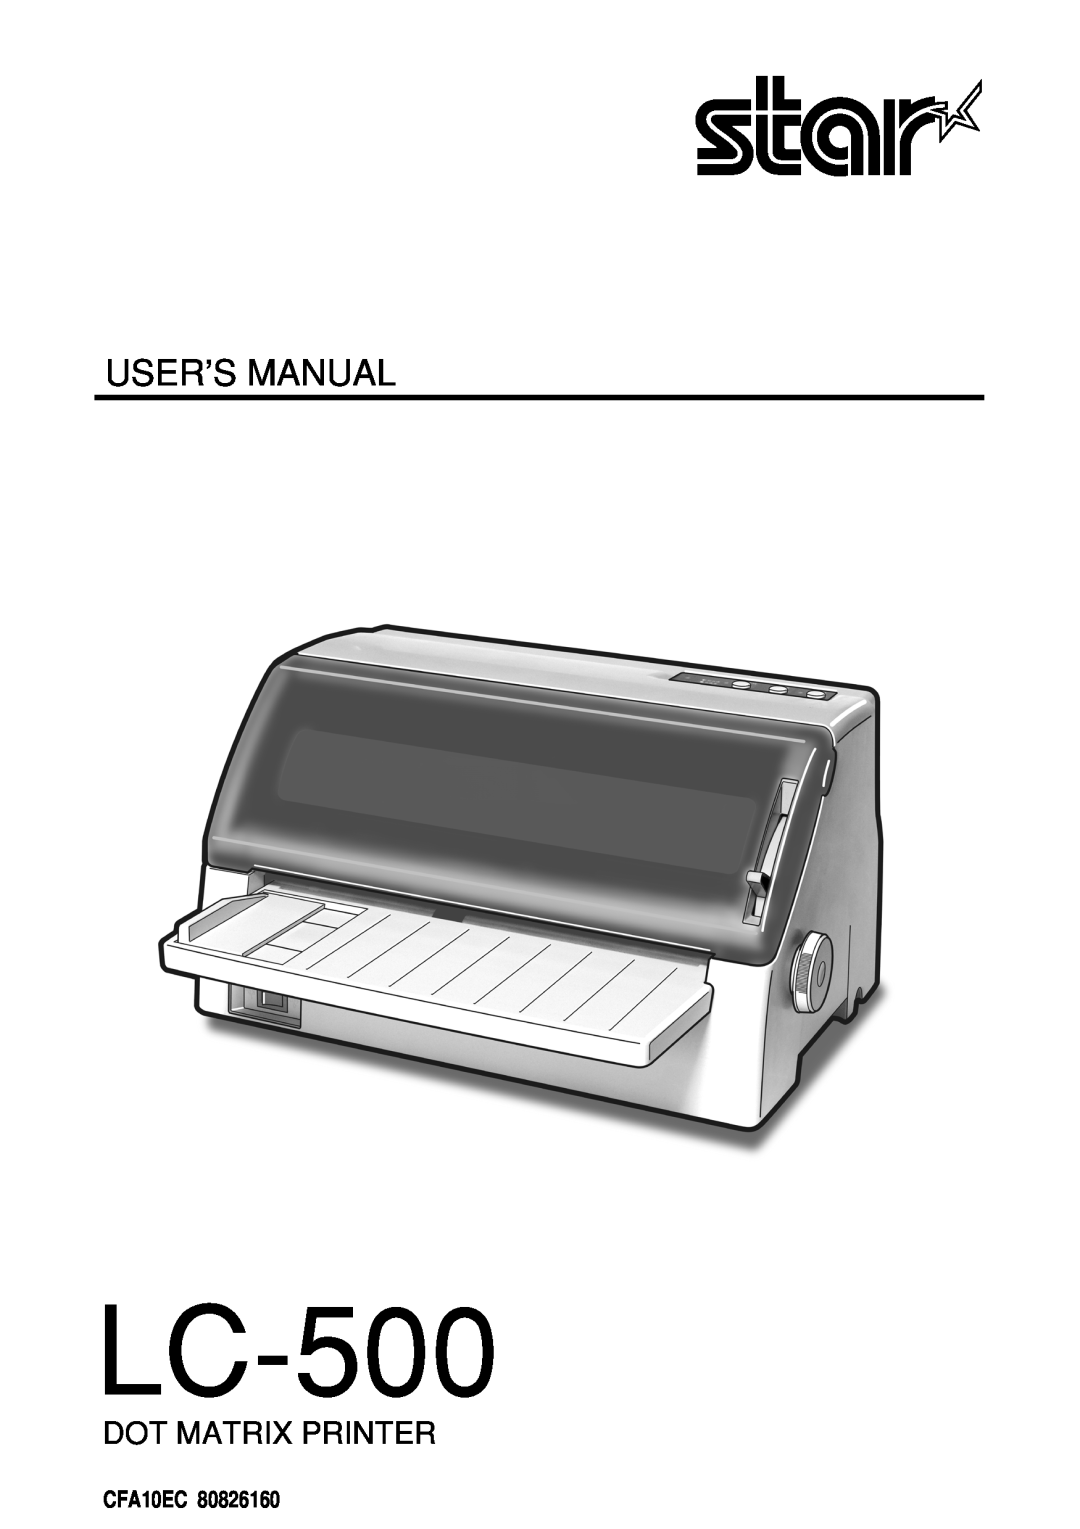 Star Micronics LC-500 user manual User’S Manual, Dot Matrix Printer, CFA10EC 